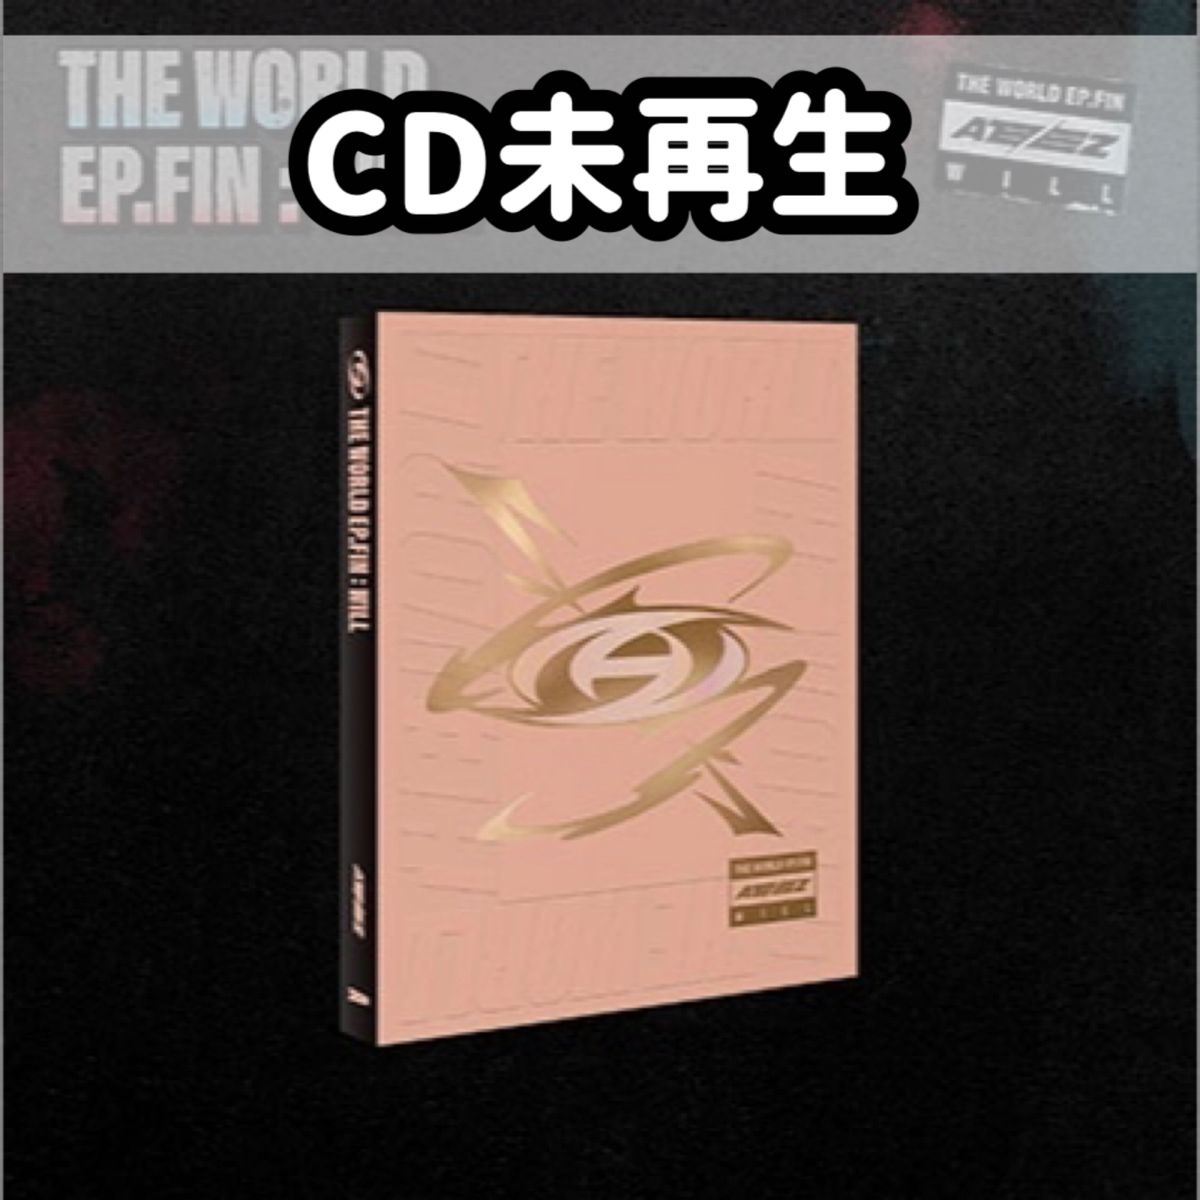 【CD未再生】ATEEZ THE WORLD EP.FIN WILL Aバージョン エイティーズ アチズ【送料込】